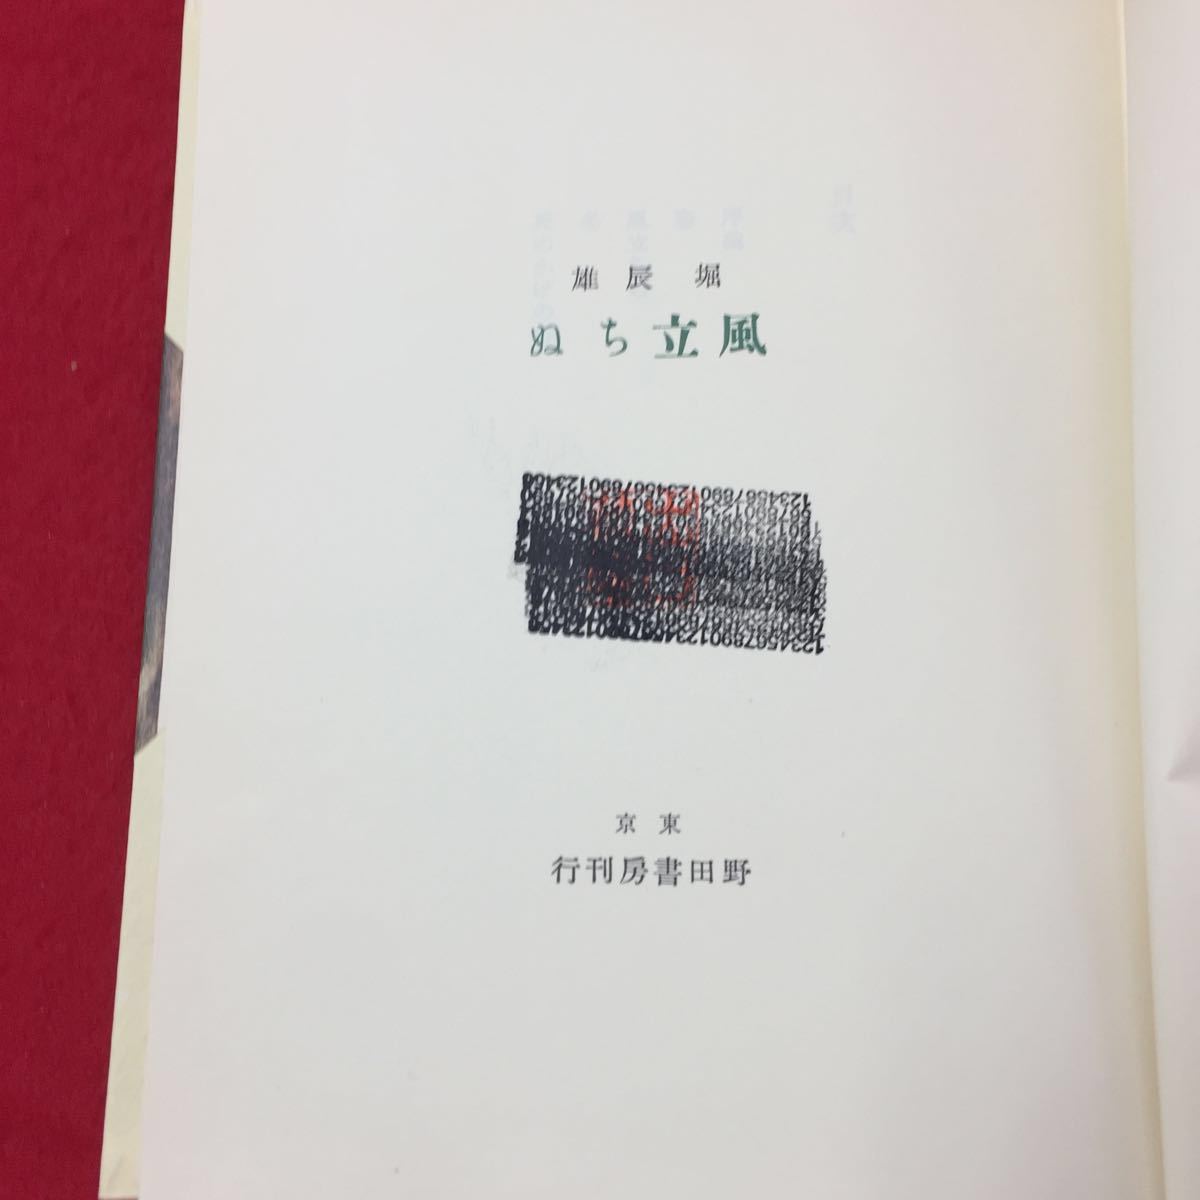 Y06-314 manner ...book@. Hori Tatsuo corporation ... publish Showa era 49 year 